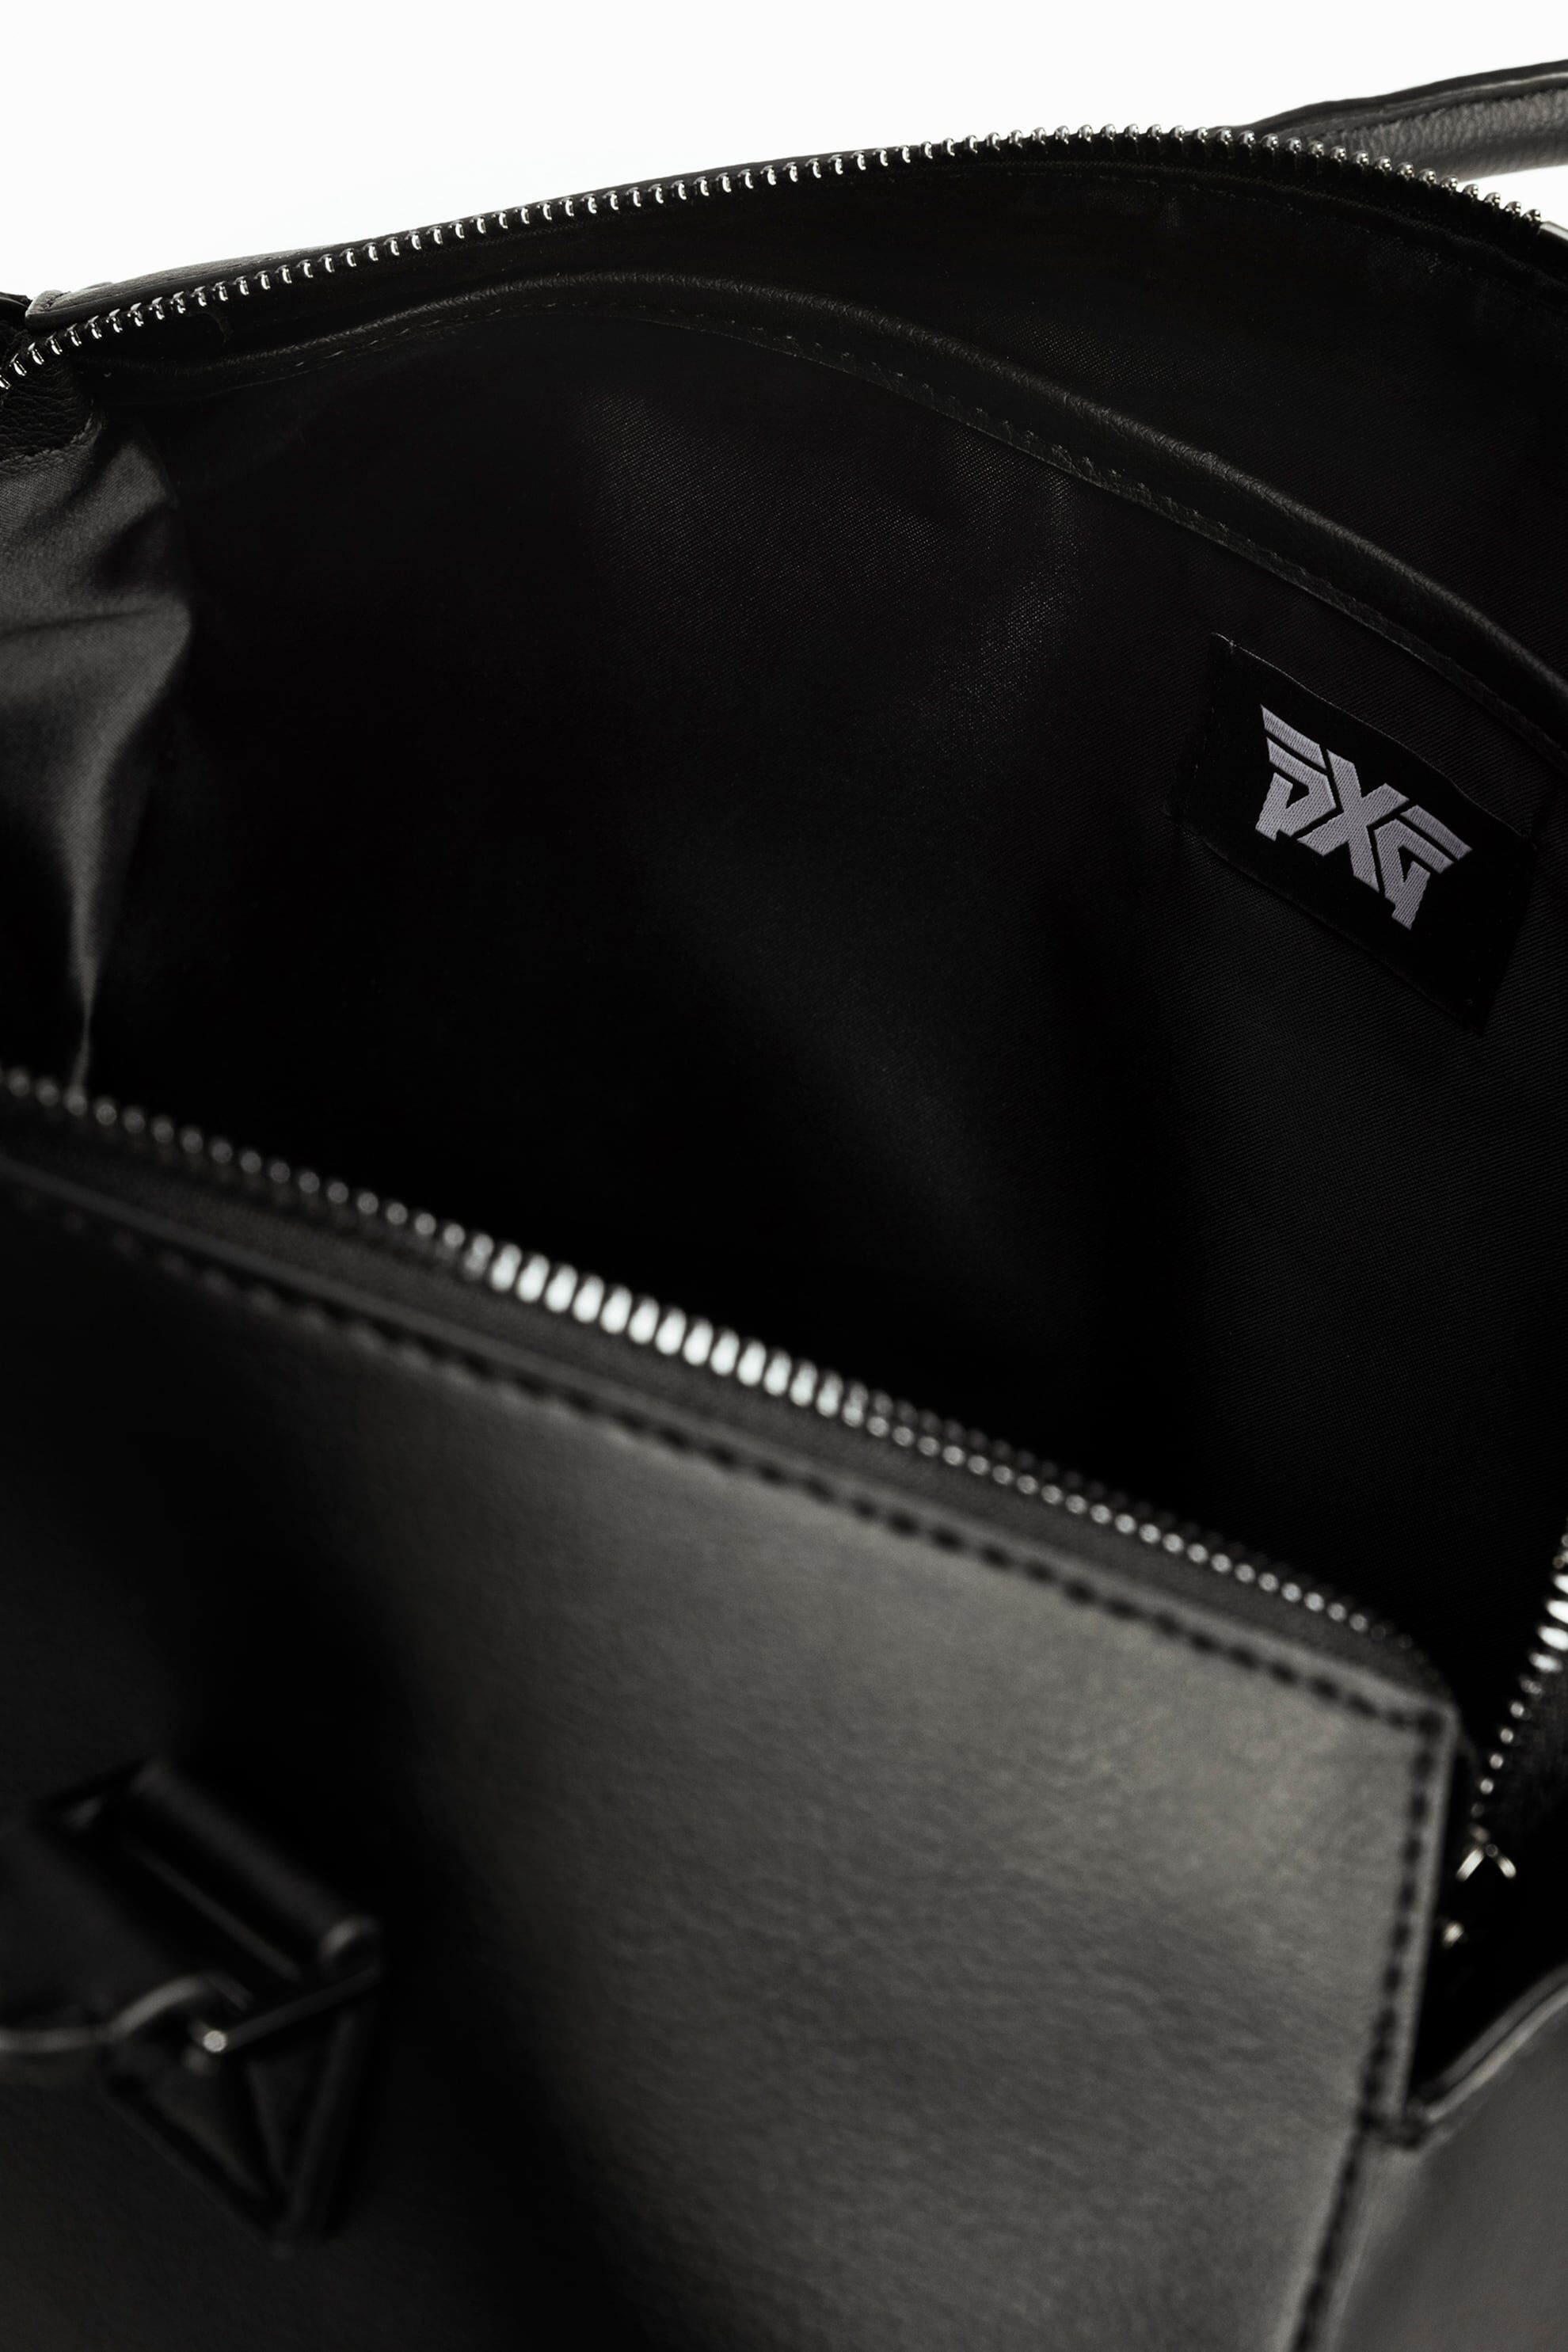 Buy Cactus Leather Signature Duffle Bag | PXG